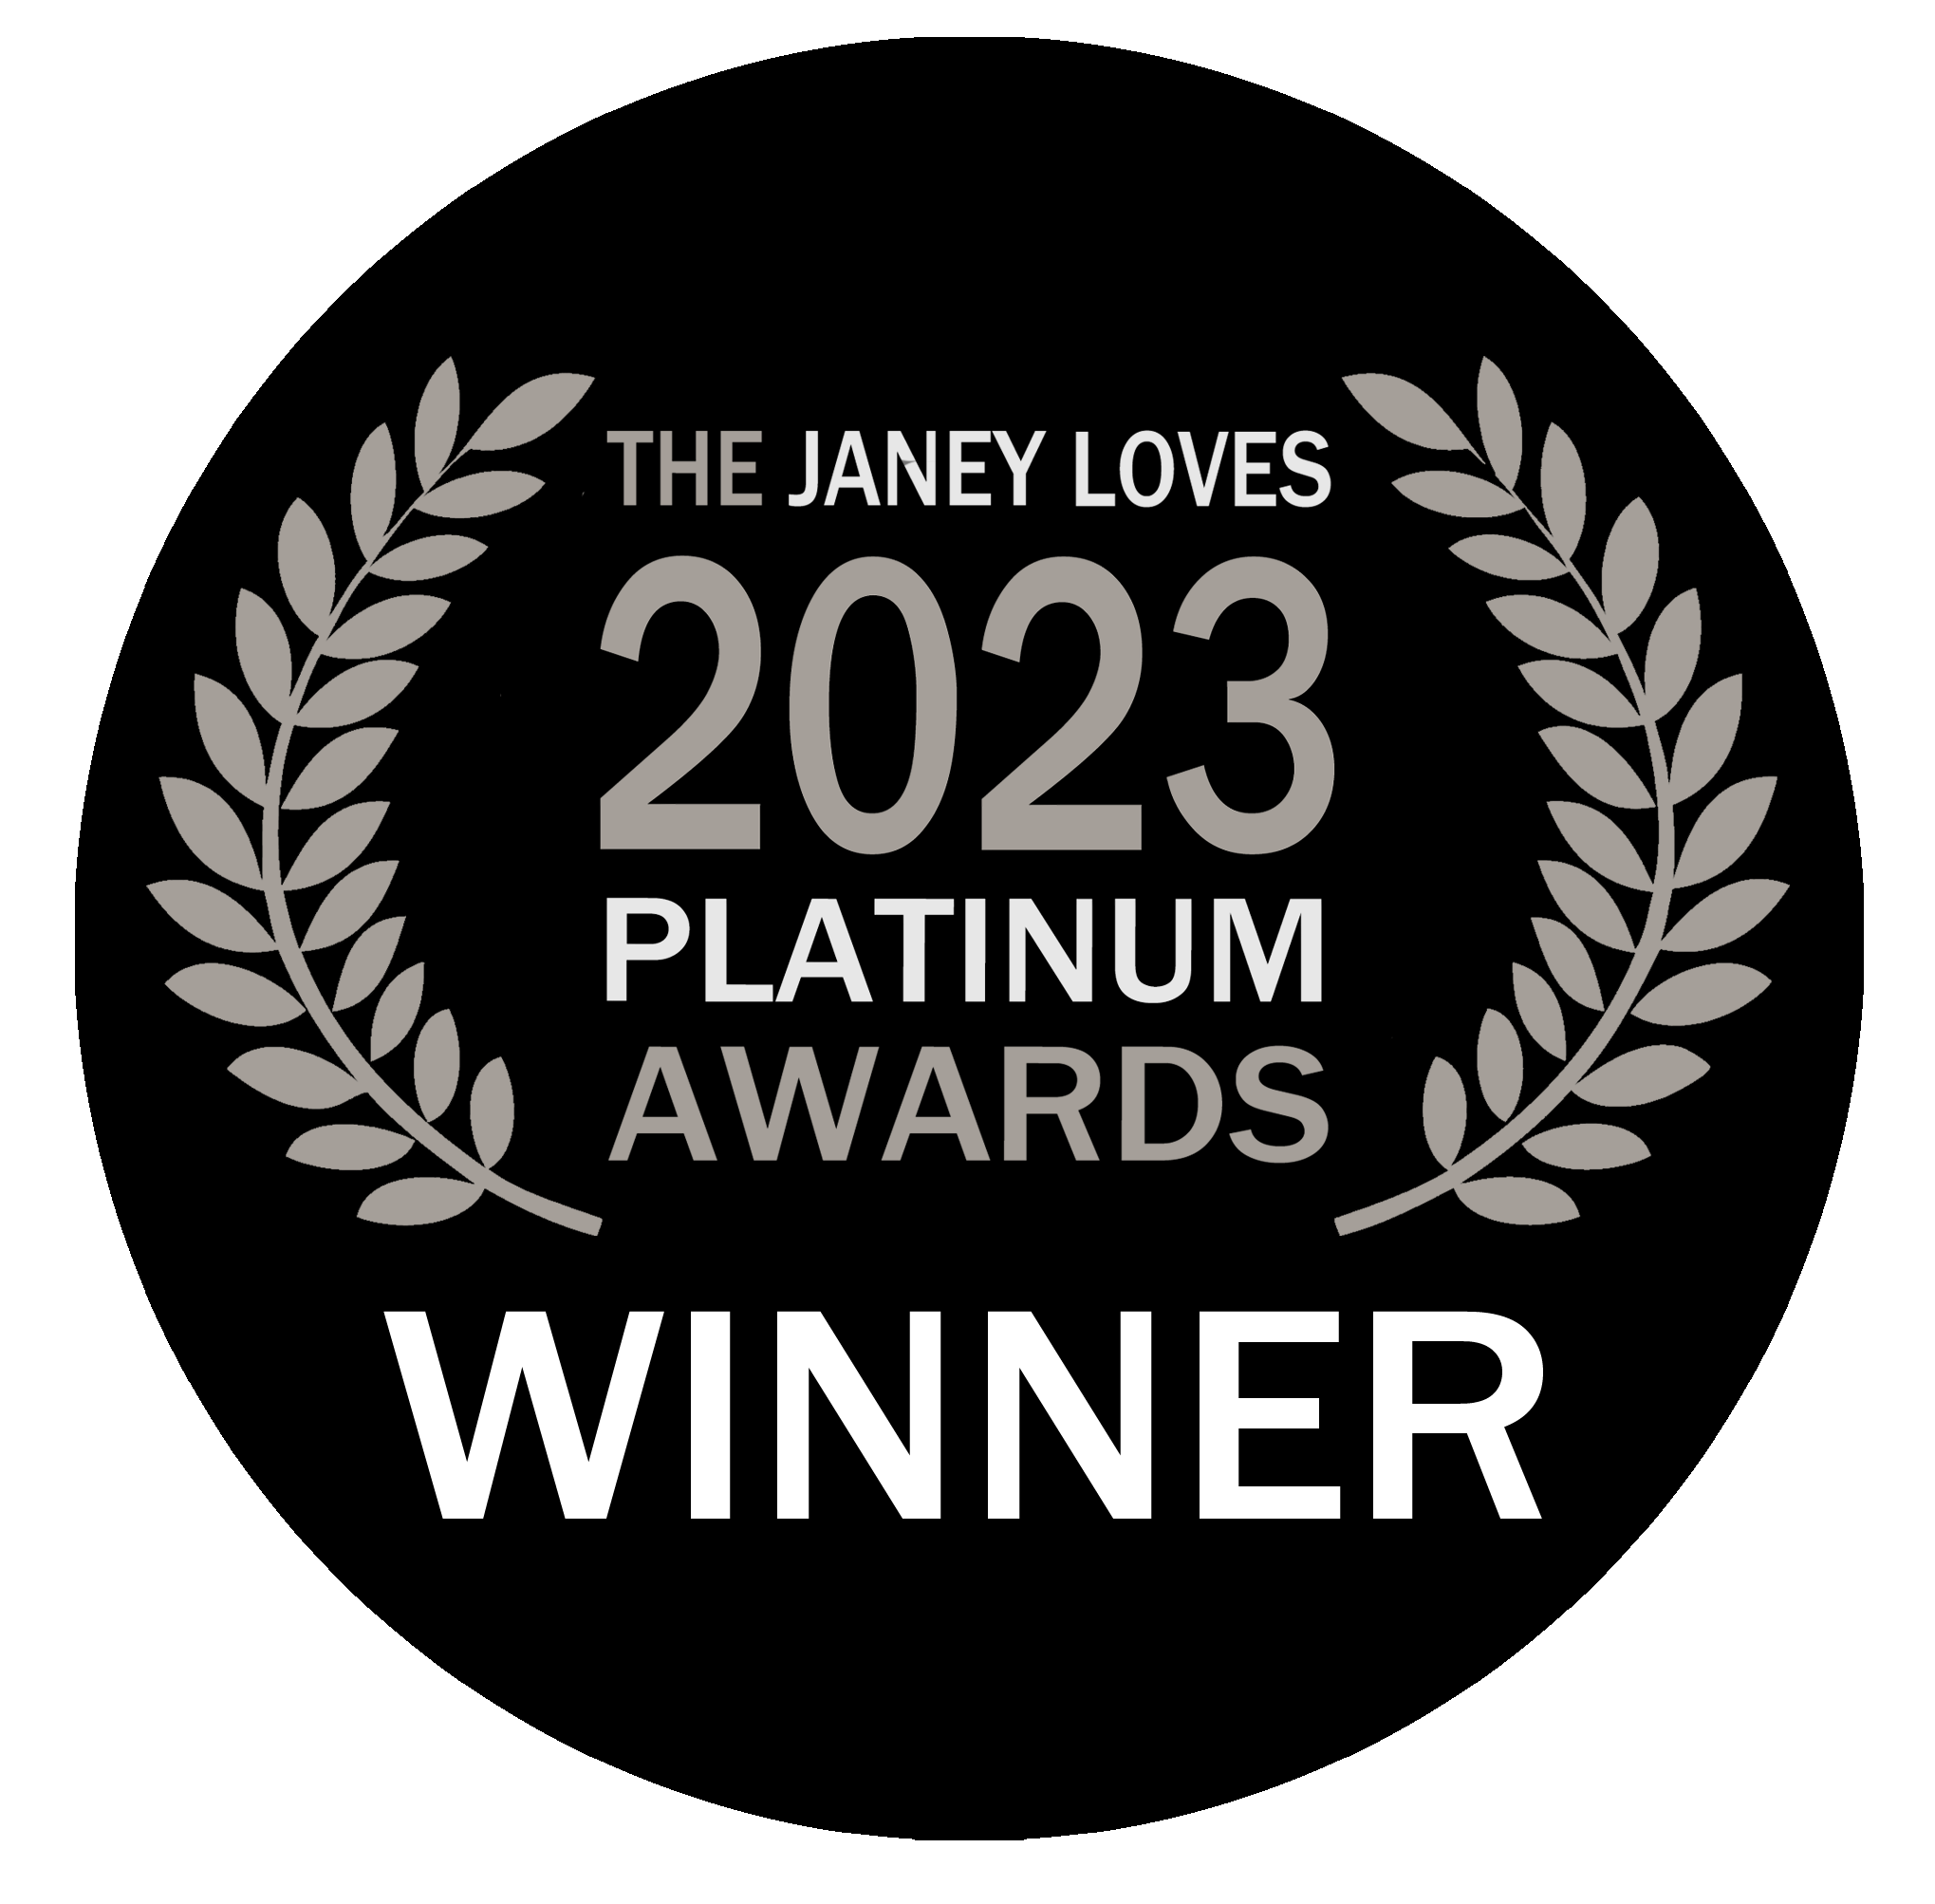 The Janey Loves 2023 Platinum Awards logo